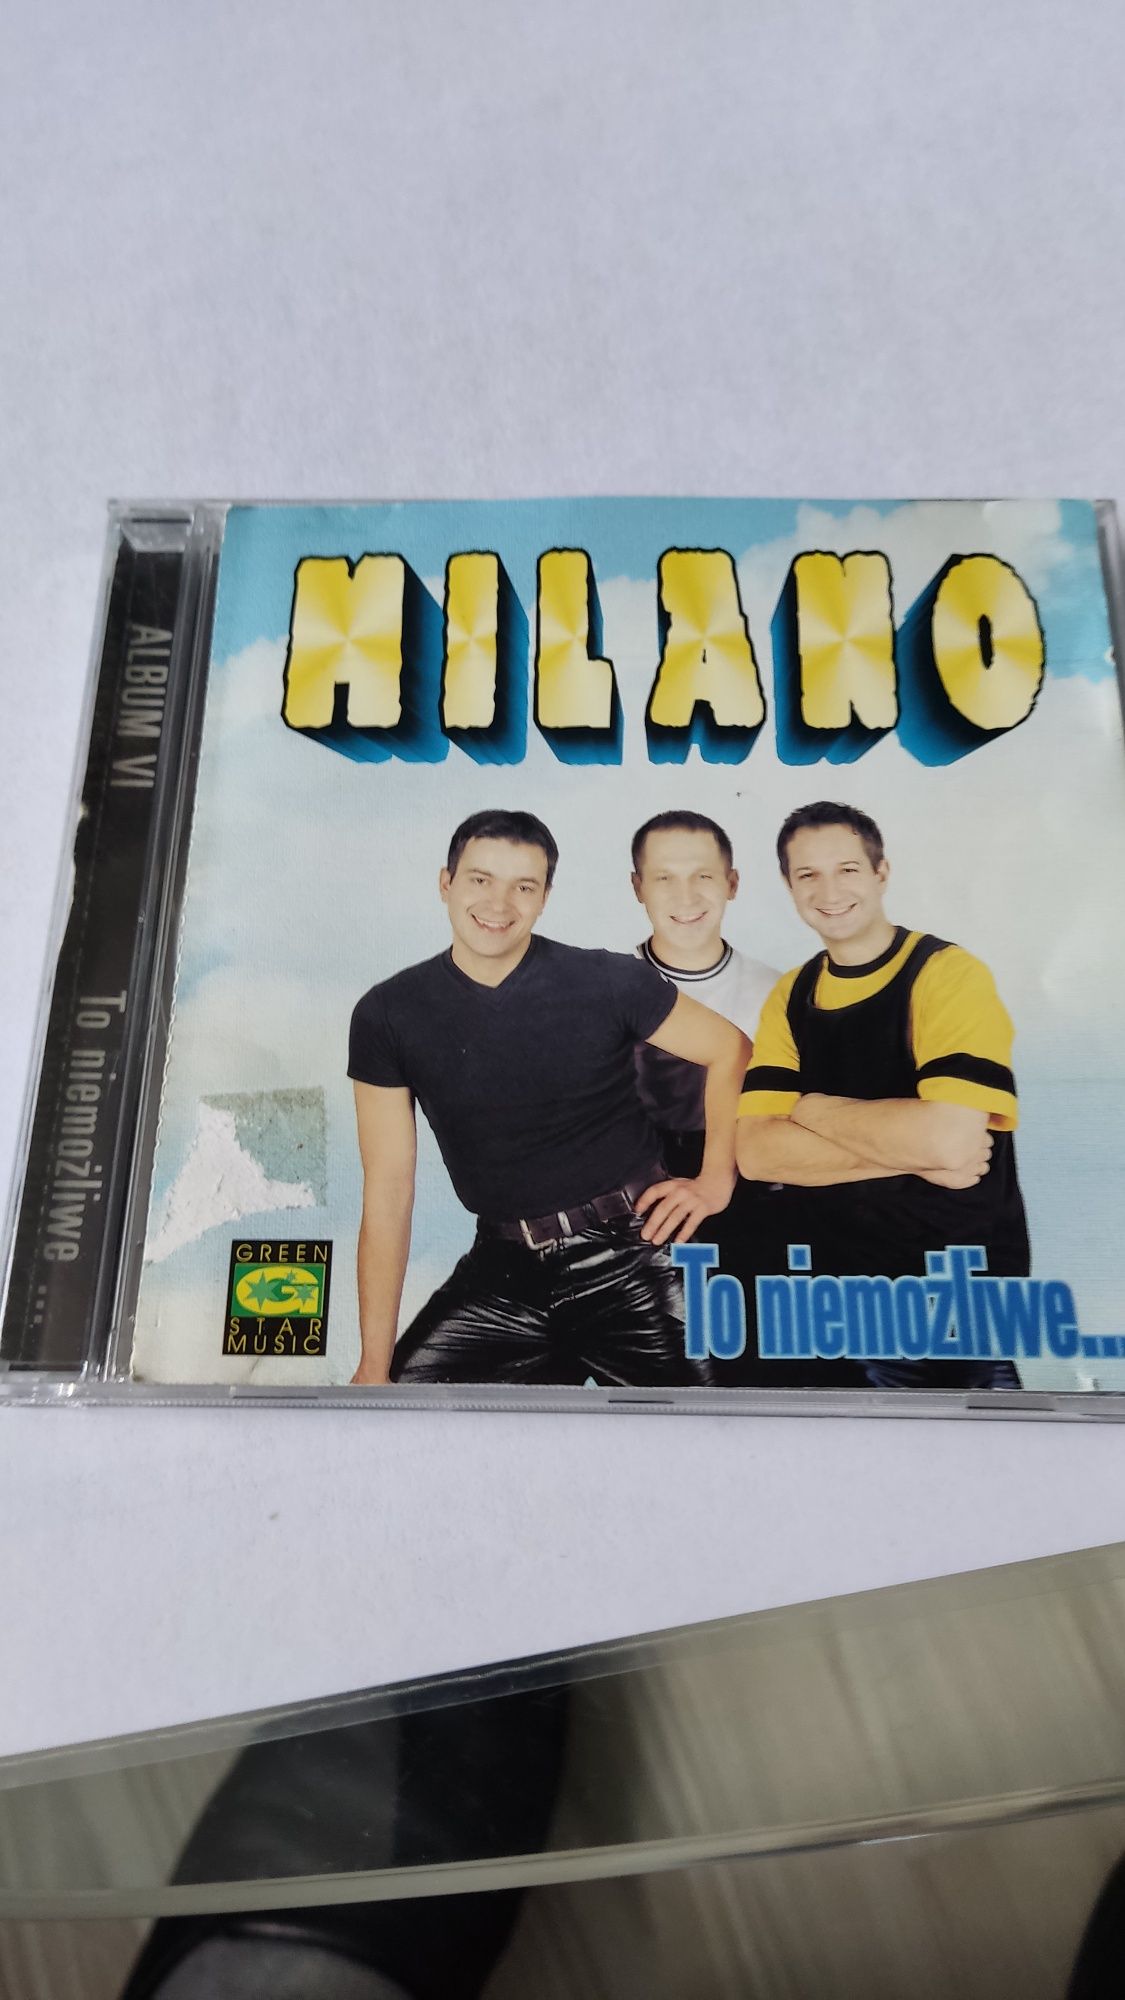 Green Star Milano To niemożliwe CD Disco polo